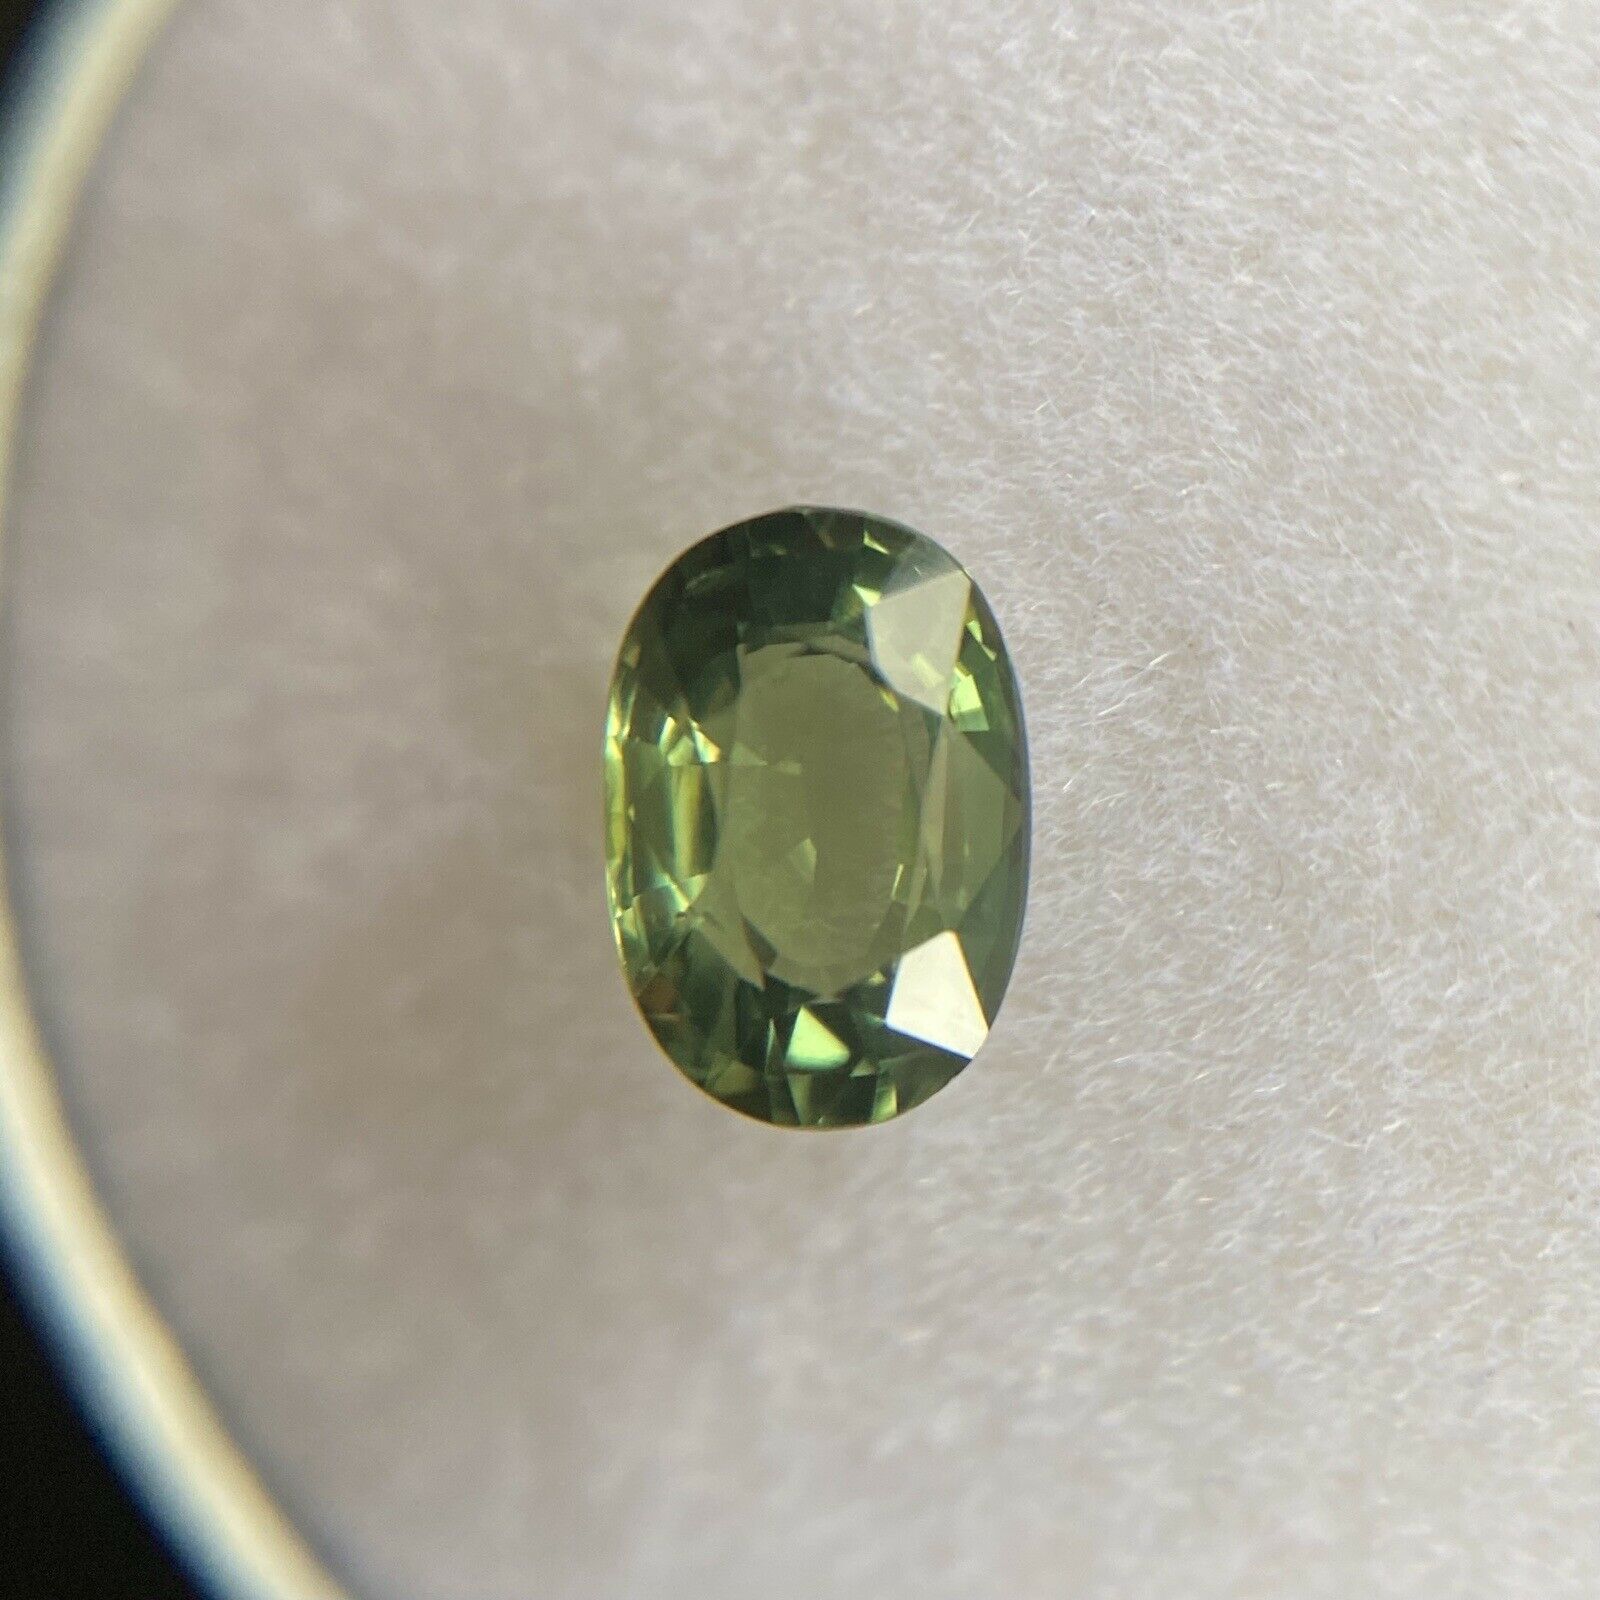 Saphir australien vert vif 0,88 carat, taille ovale, pierre précieuse non sertie, rare